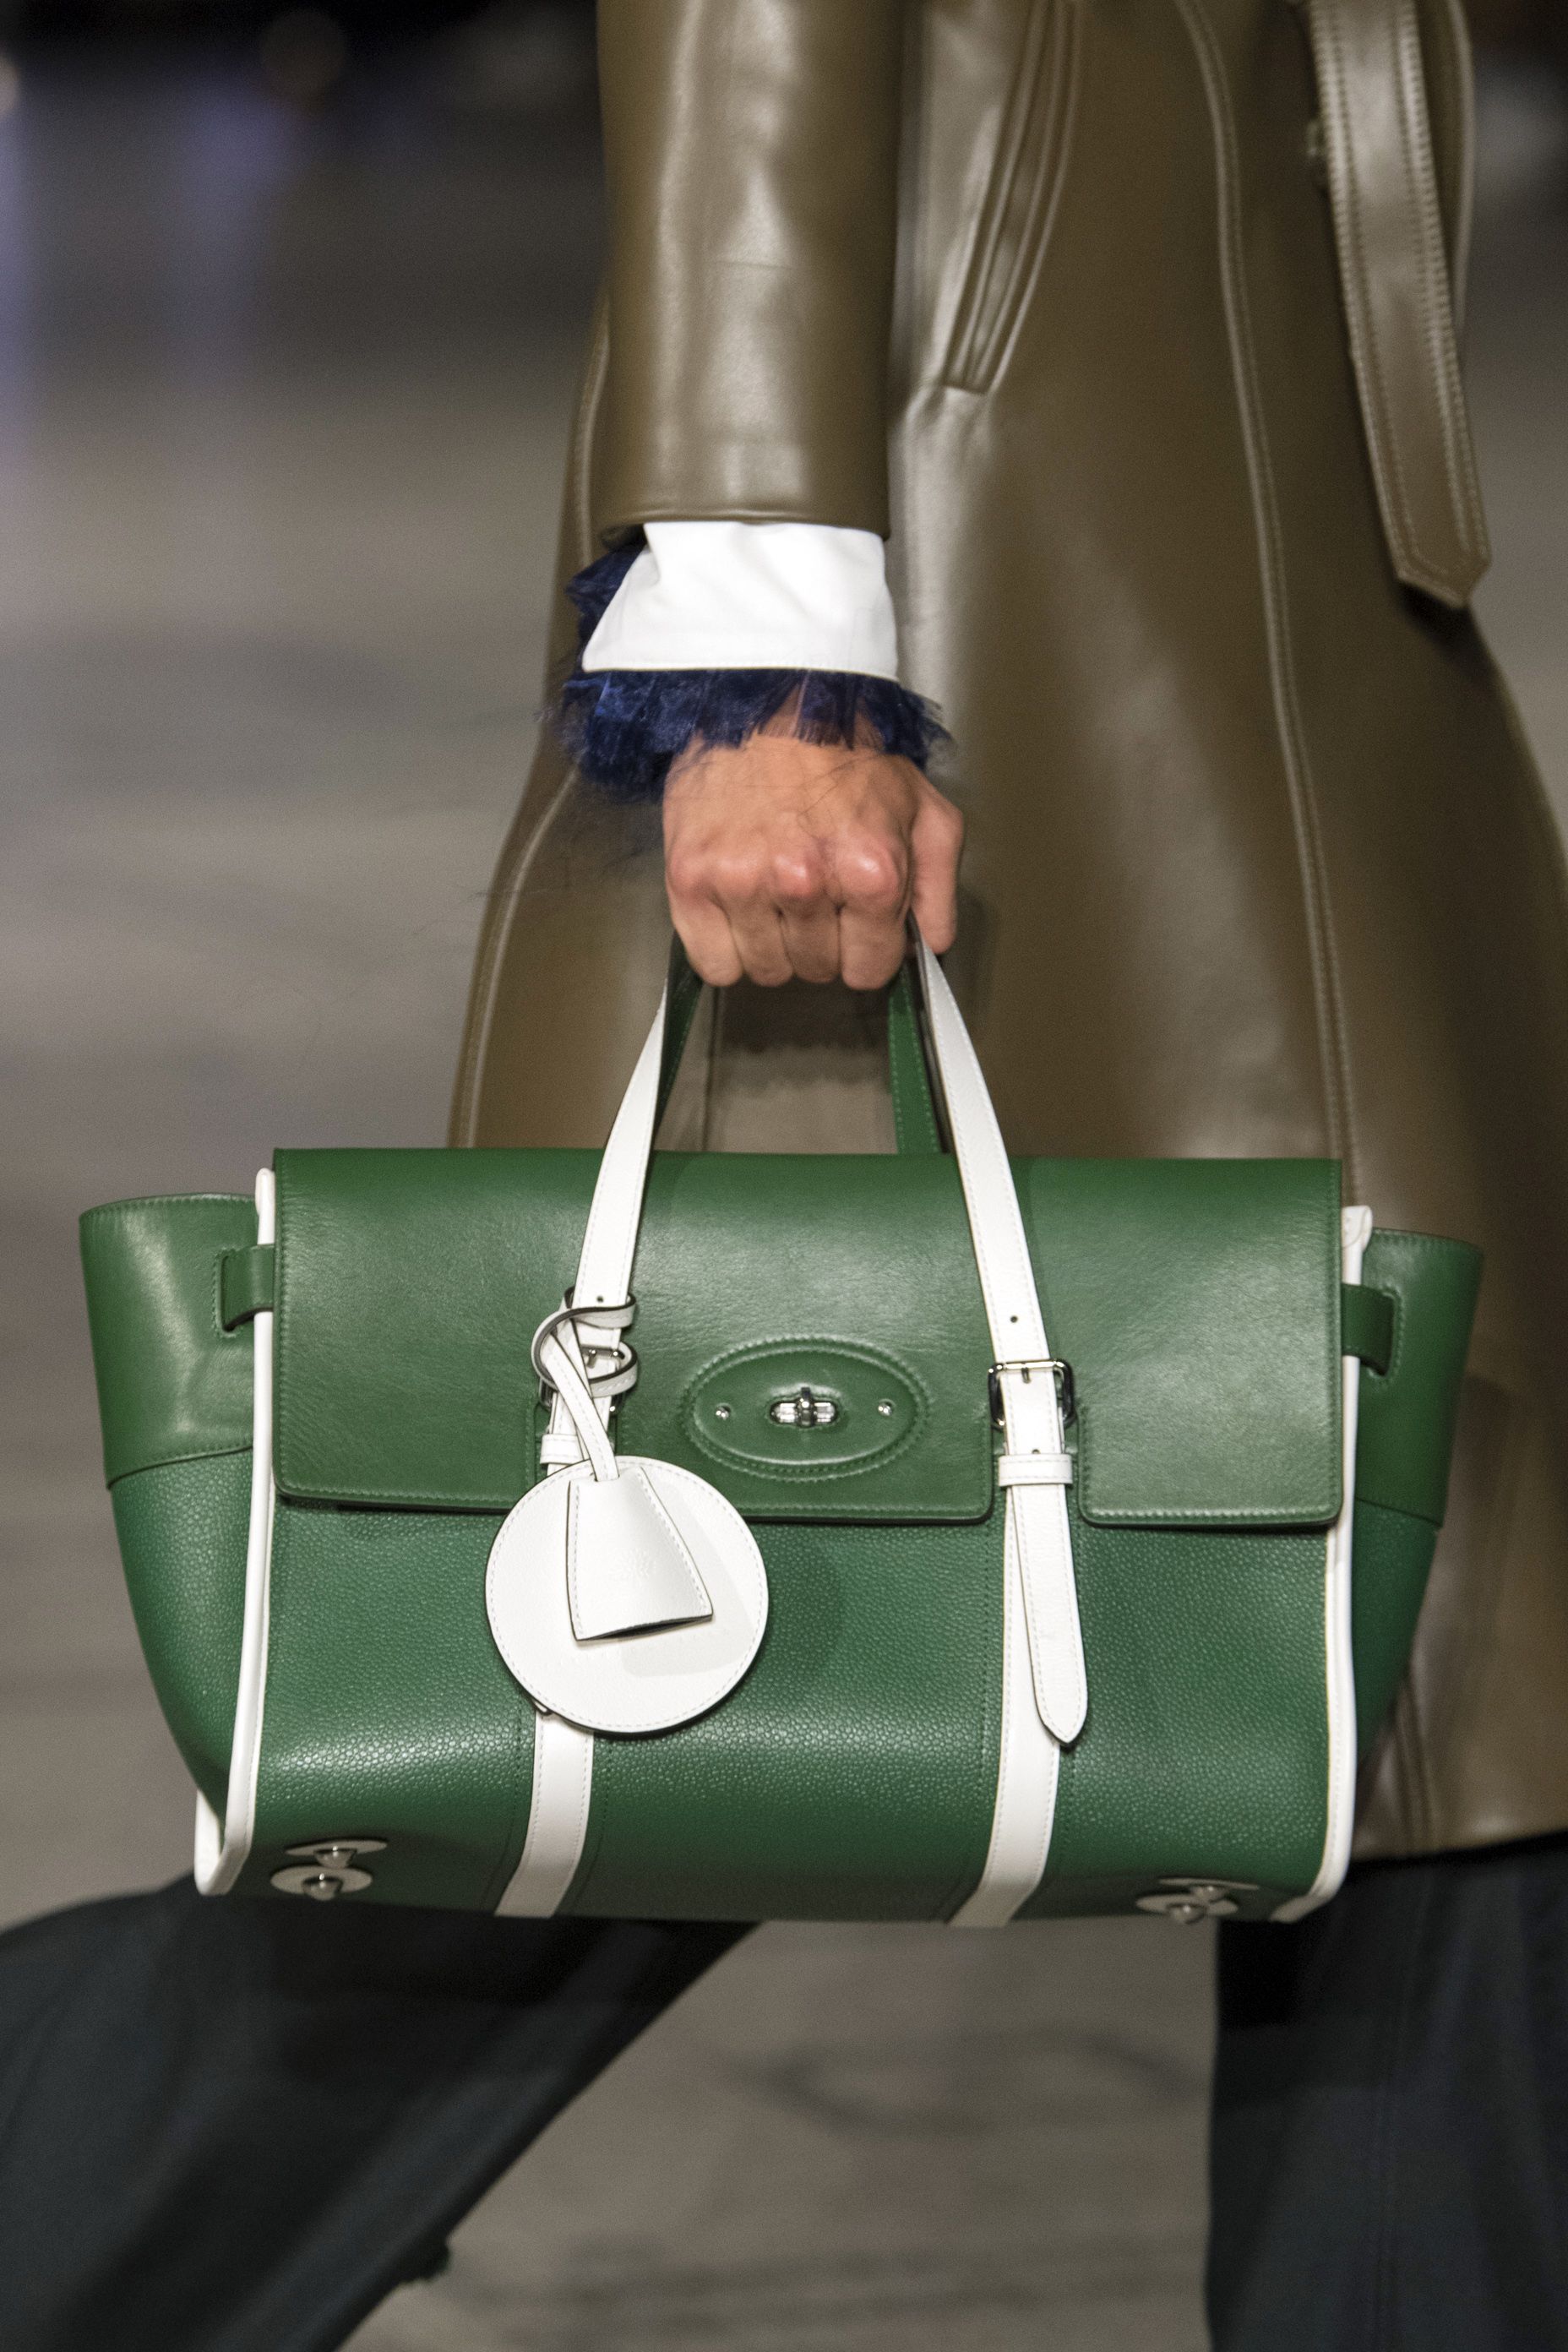 Top Handbag Trends for Spring 2022